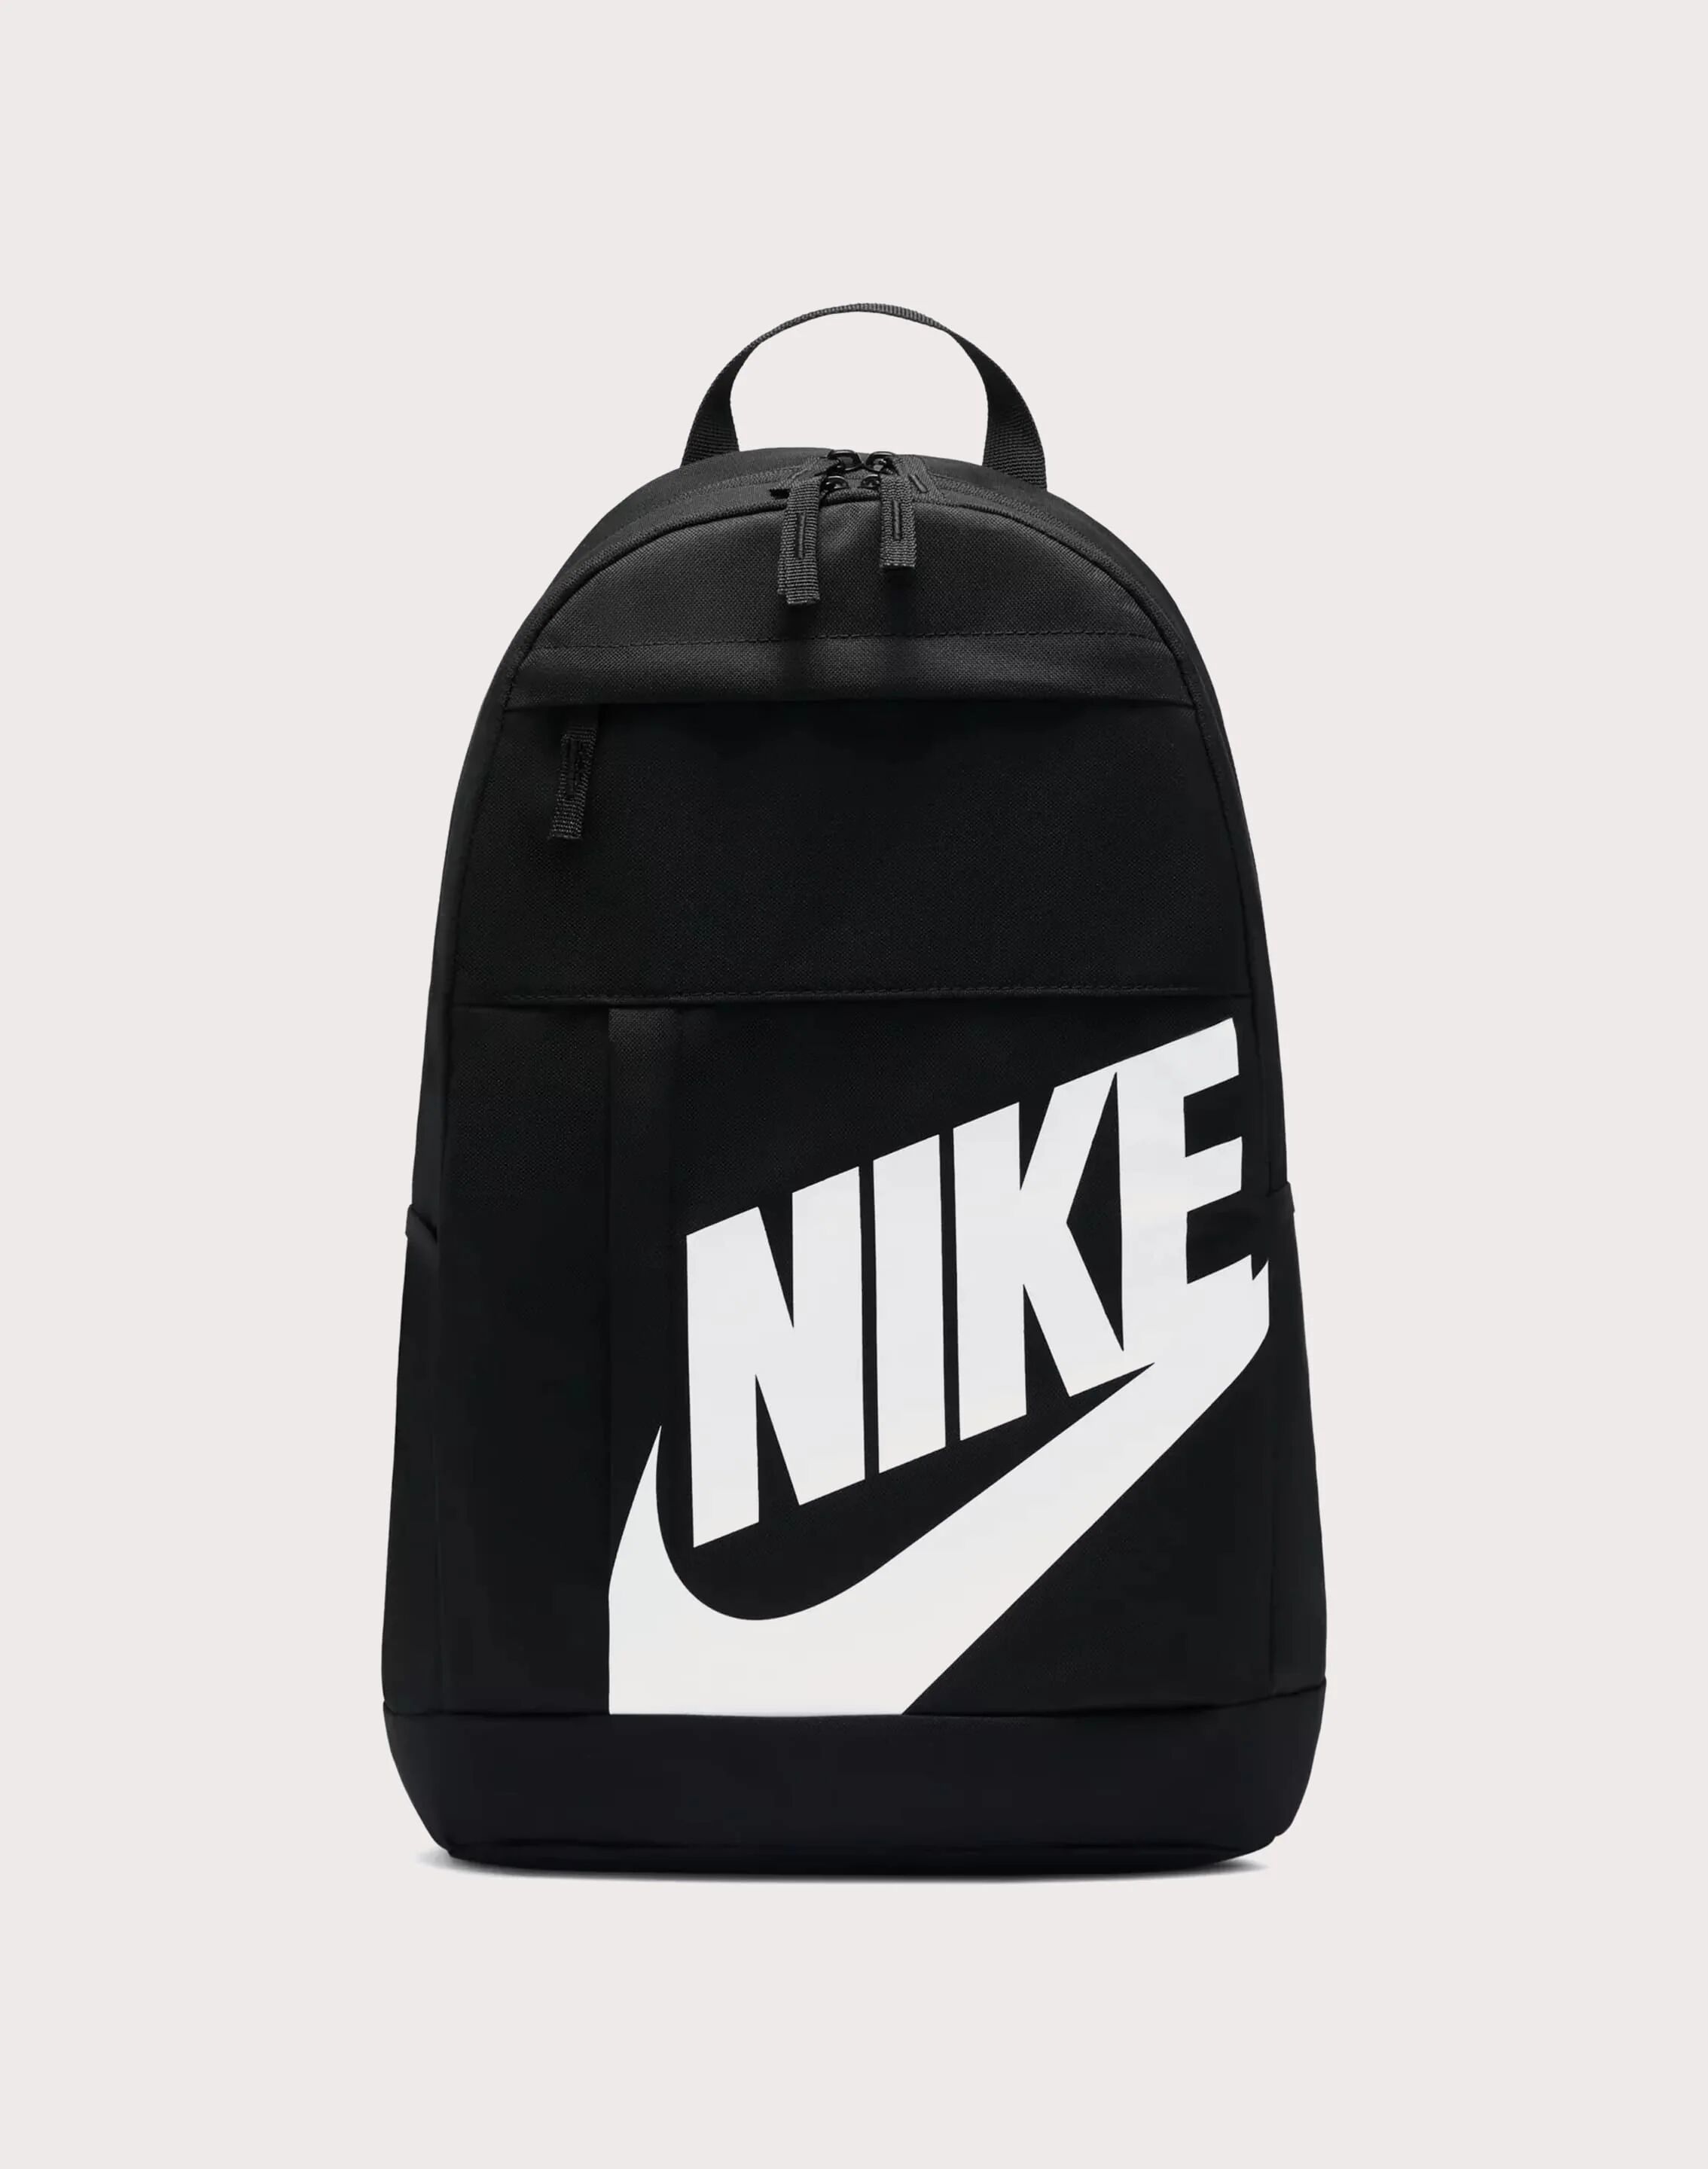 Nike Elemental Backpack  - Black - Size: 1 SIZE